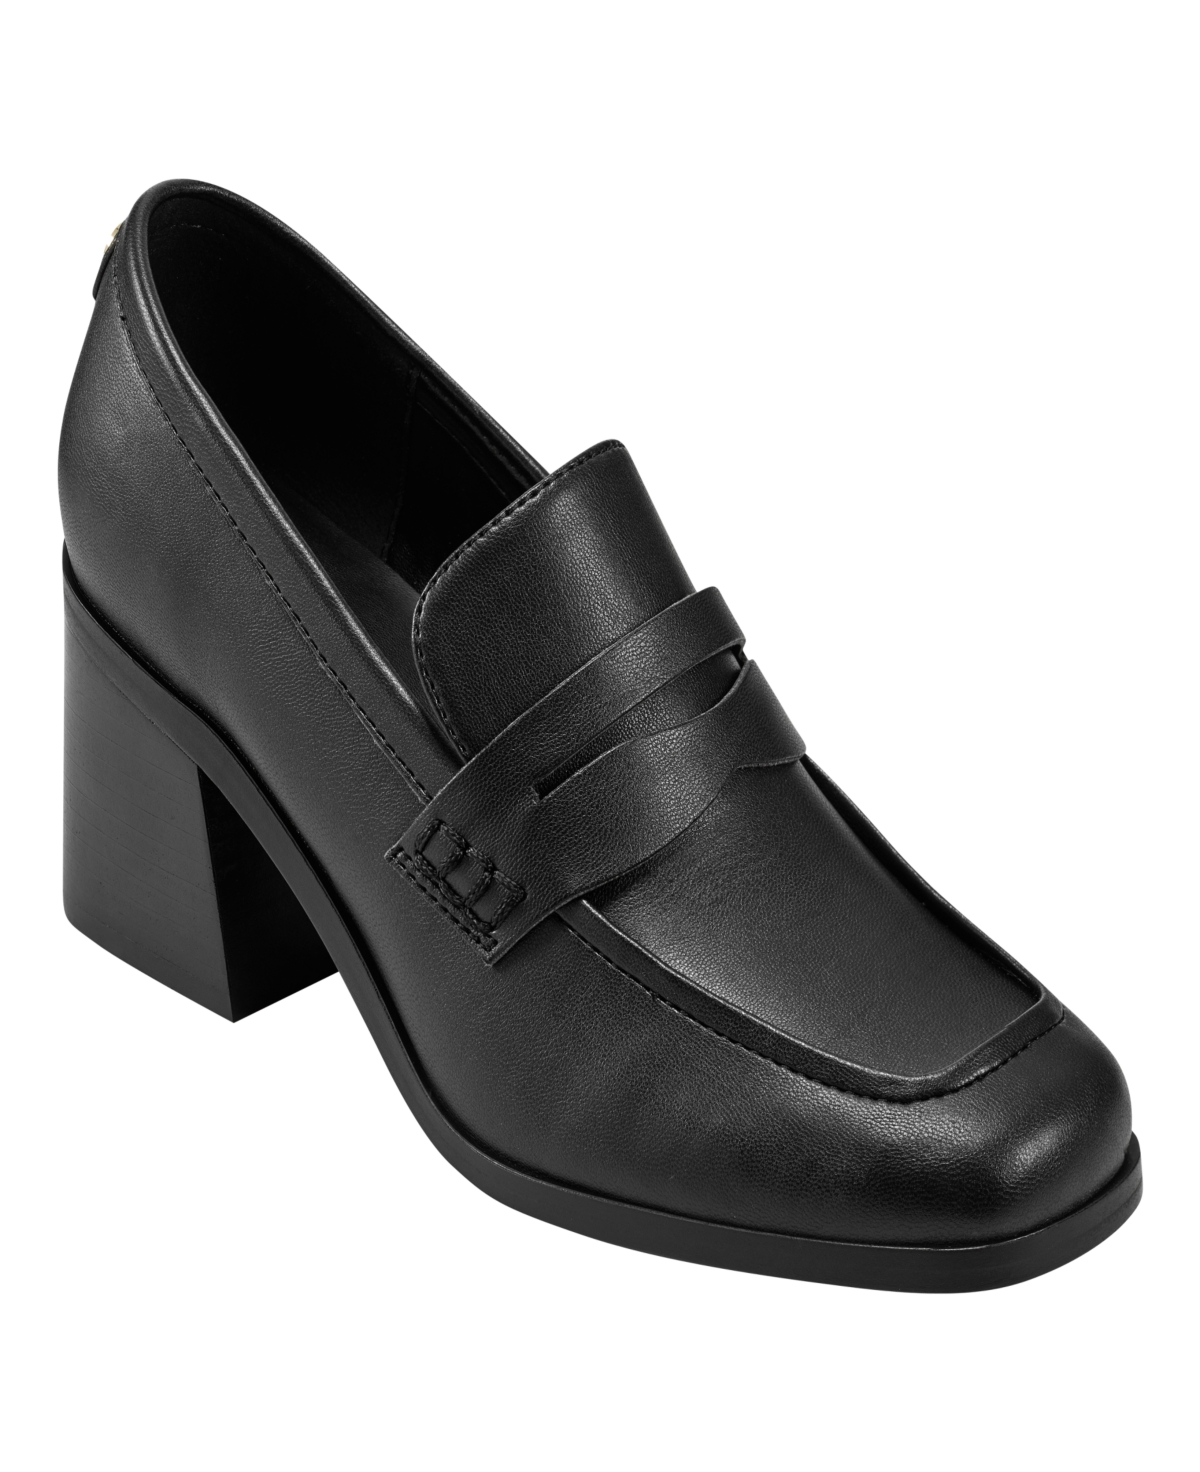 Women's Kchris Heeled Loafers - Black Faux Leather